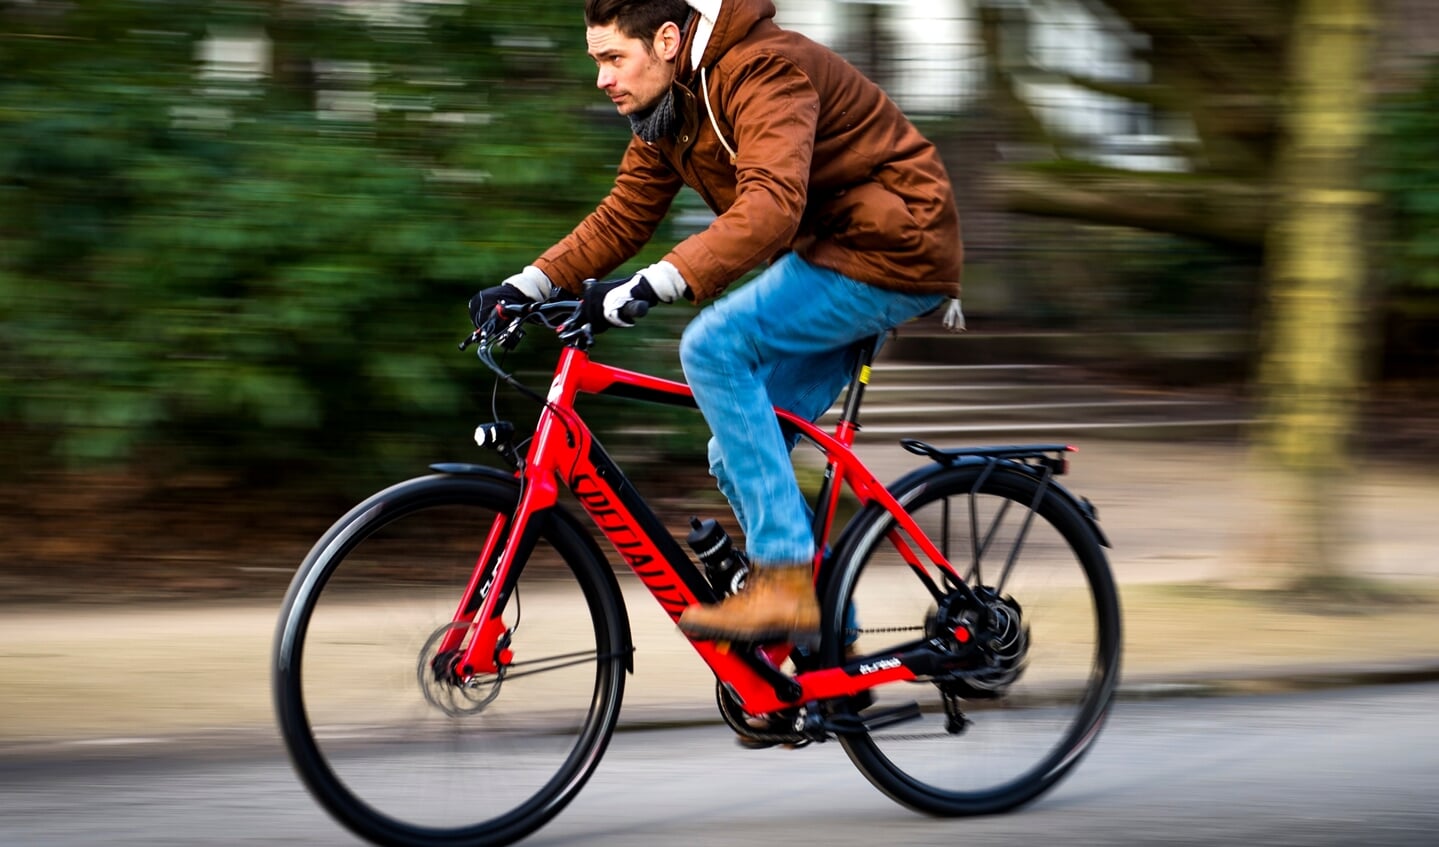 BOVAG: ,,De e-bike wordt in de volle breedte omarmd."